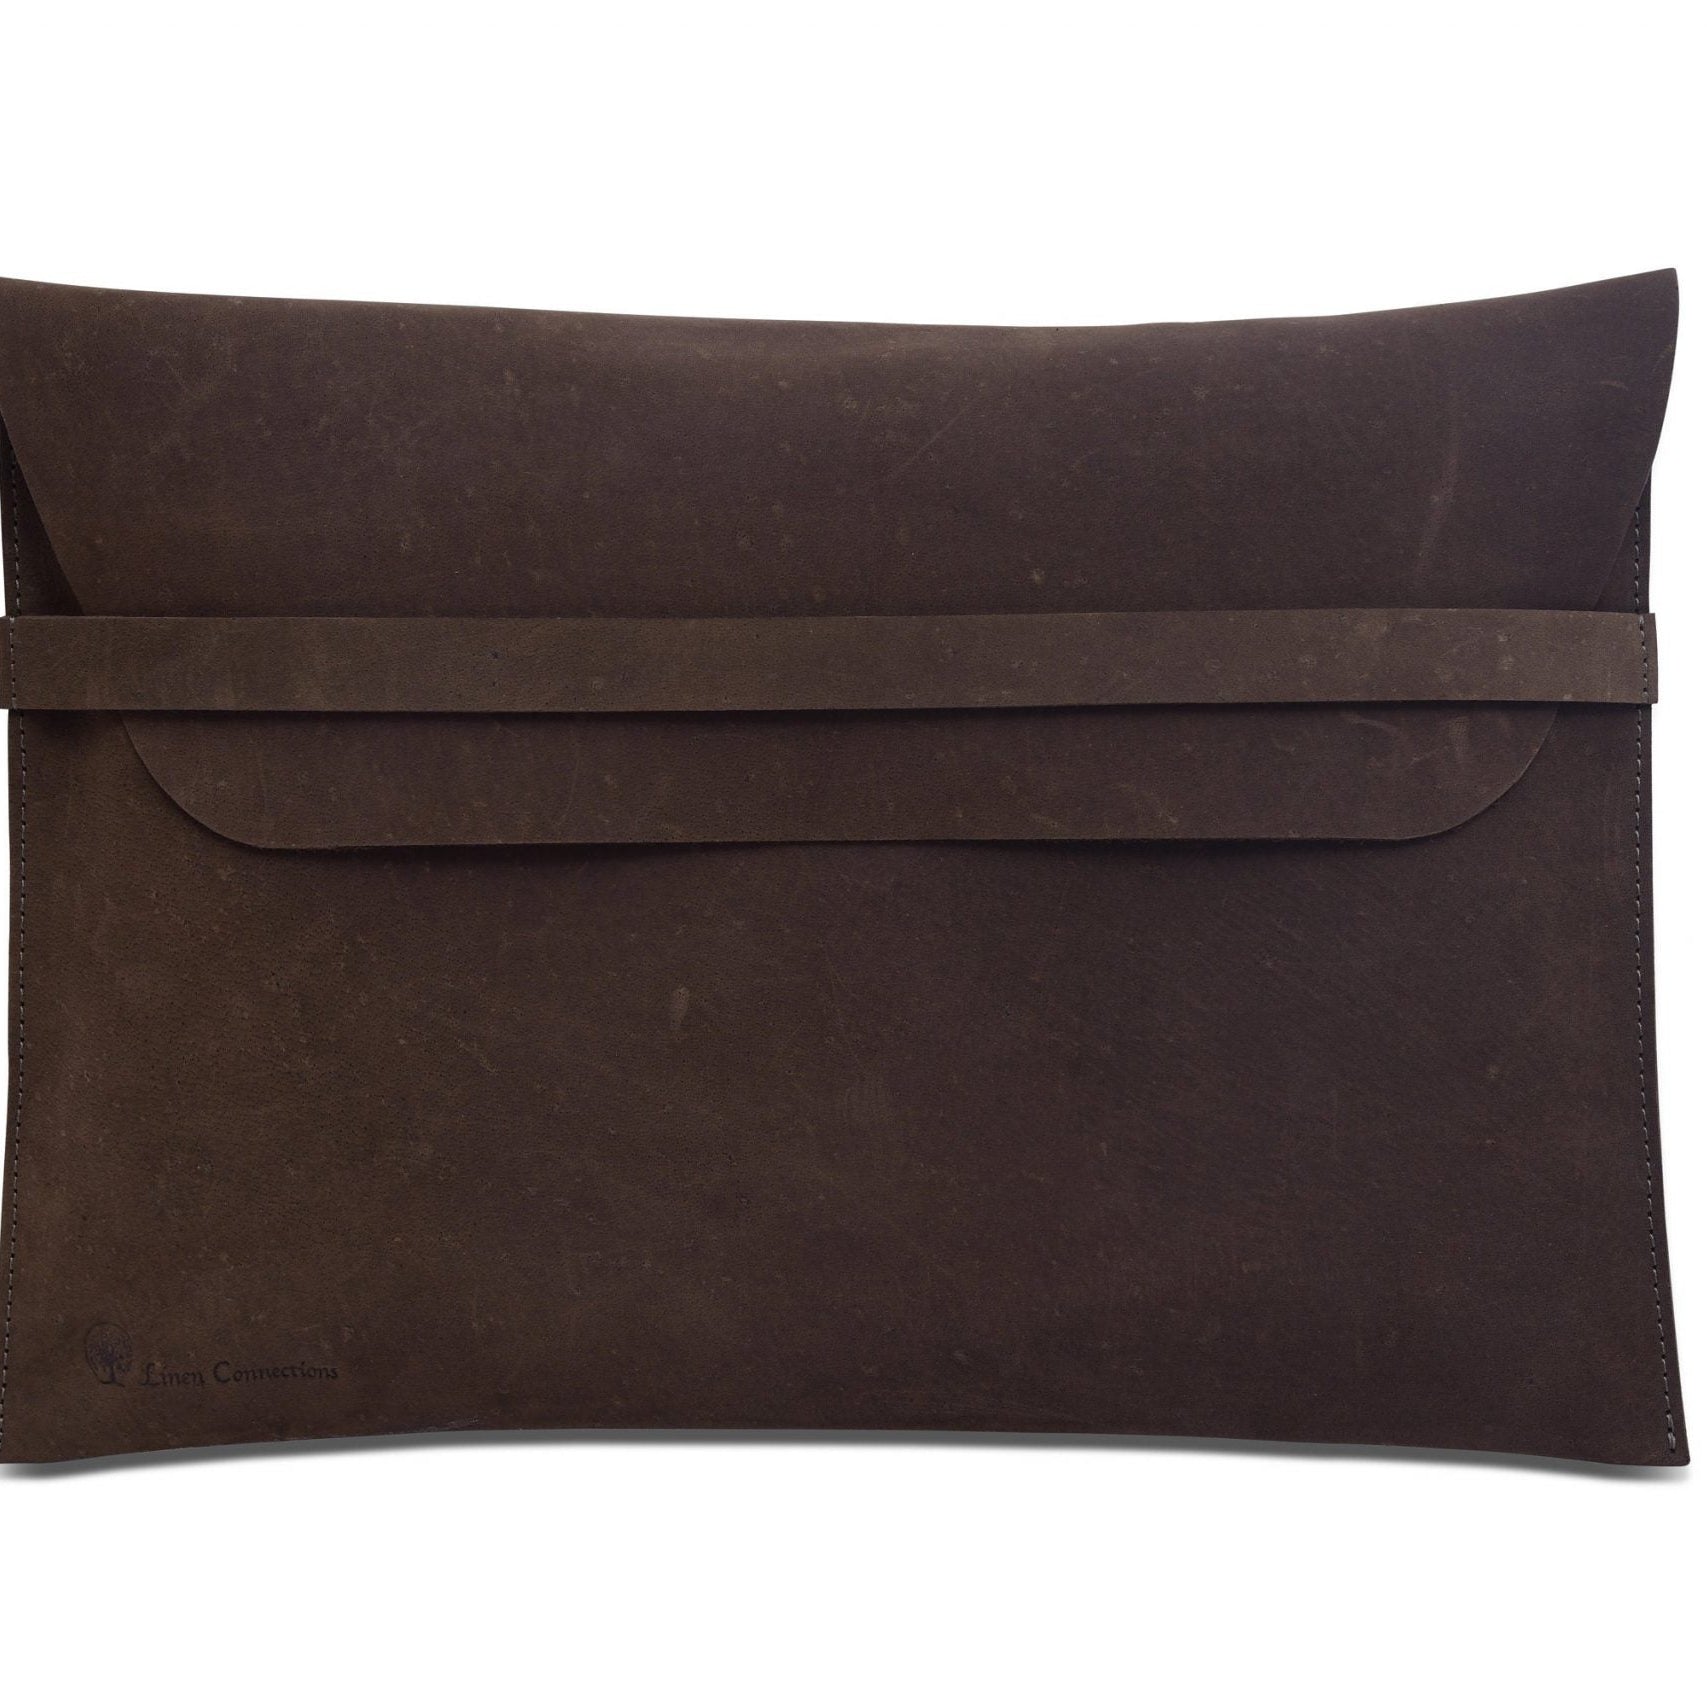 Handmade Genuine Leather macbook sleeve case for 12 13 15 inch macbook